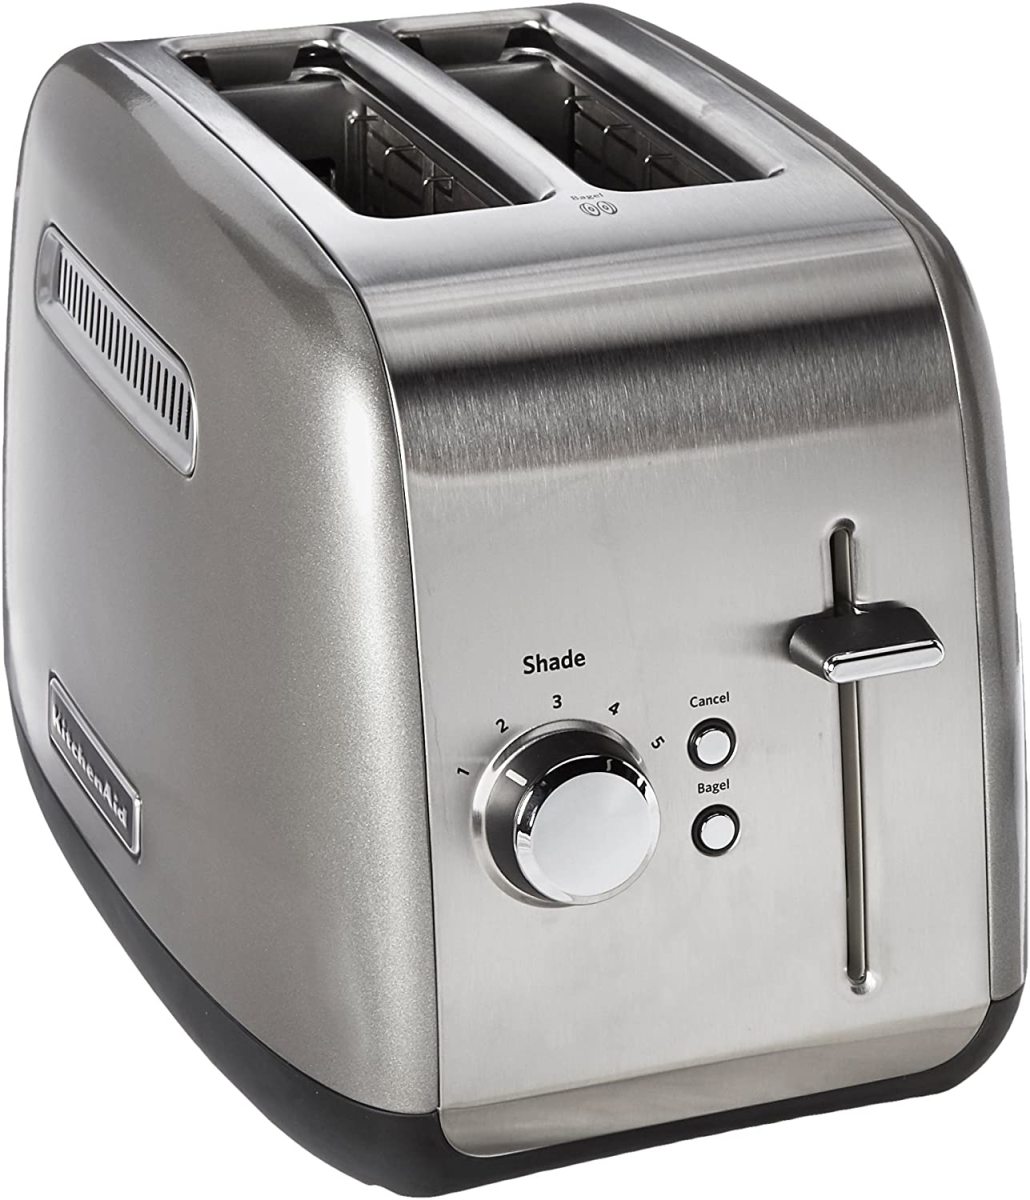 The KitchenAid KMT2115CU Toaster